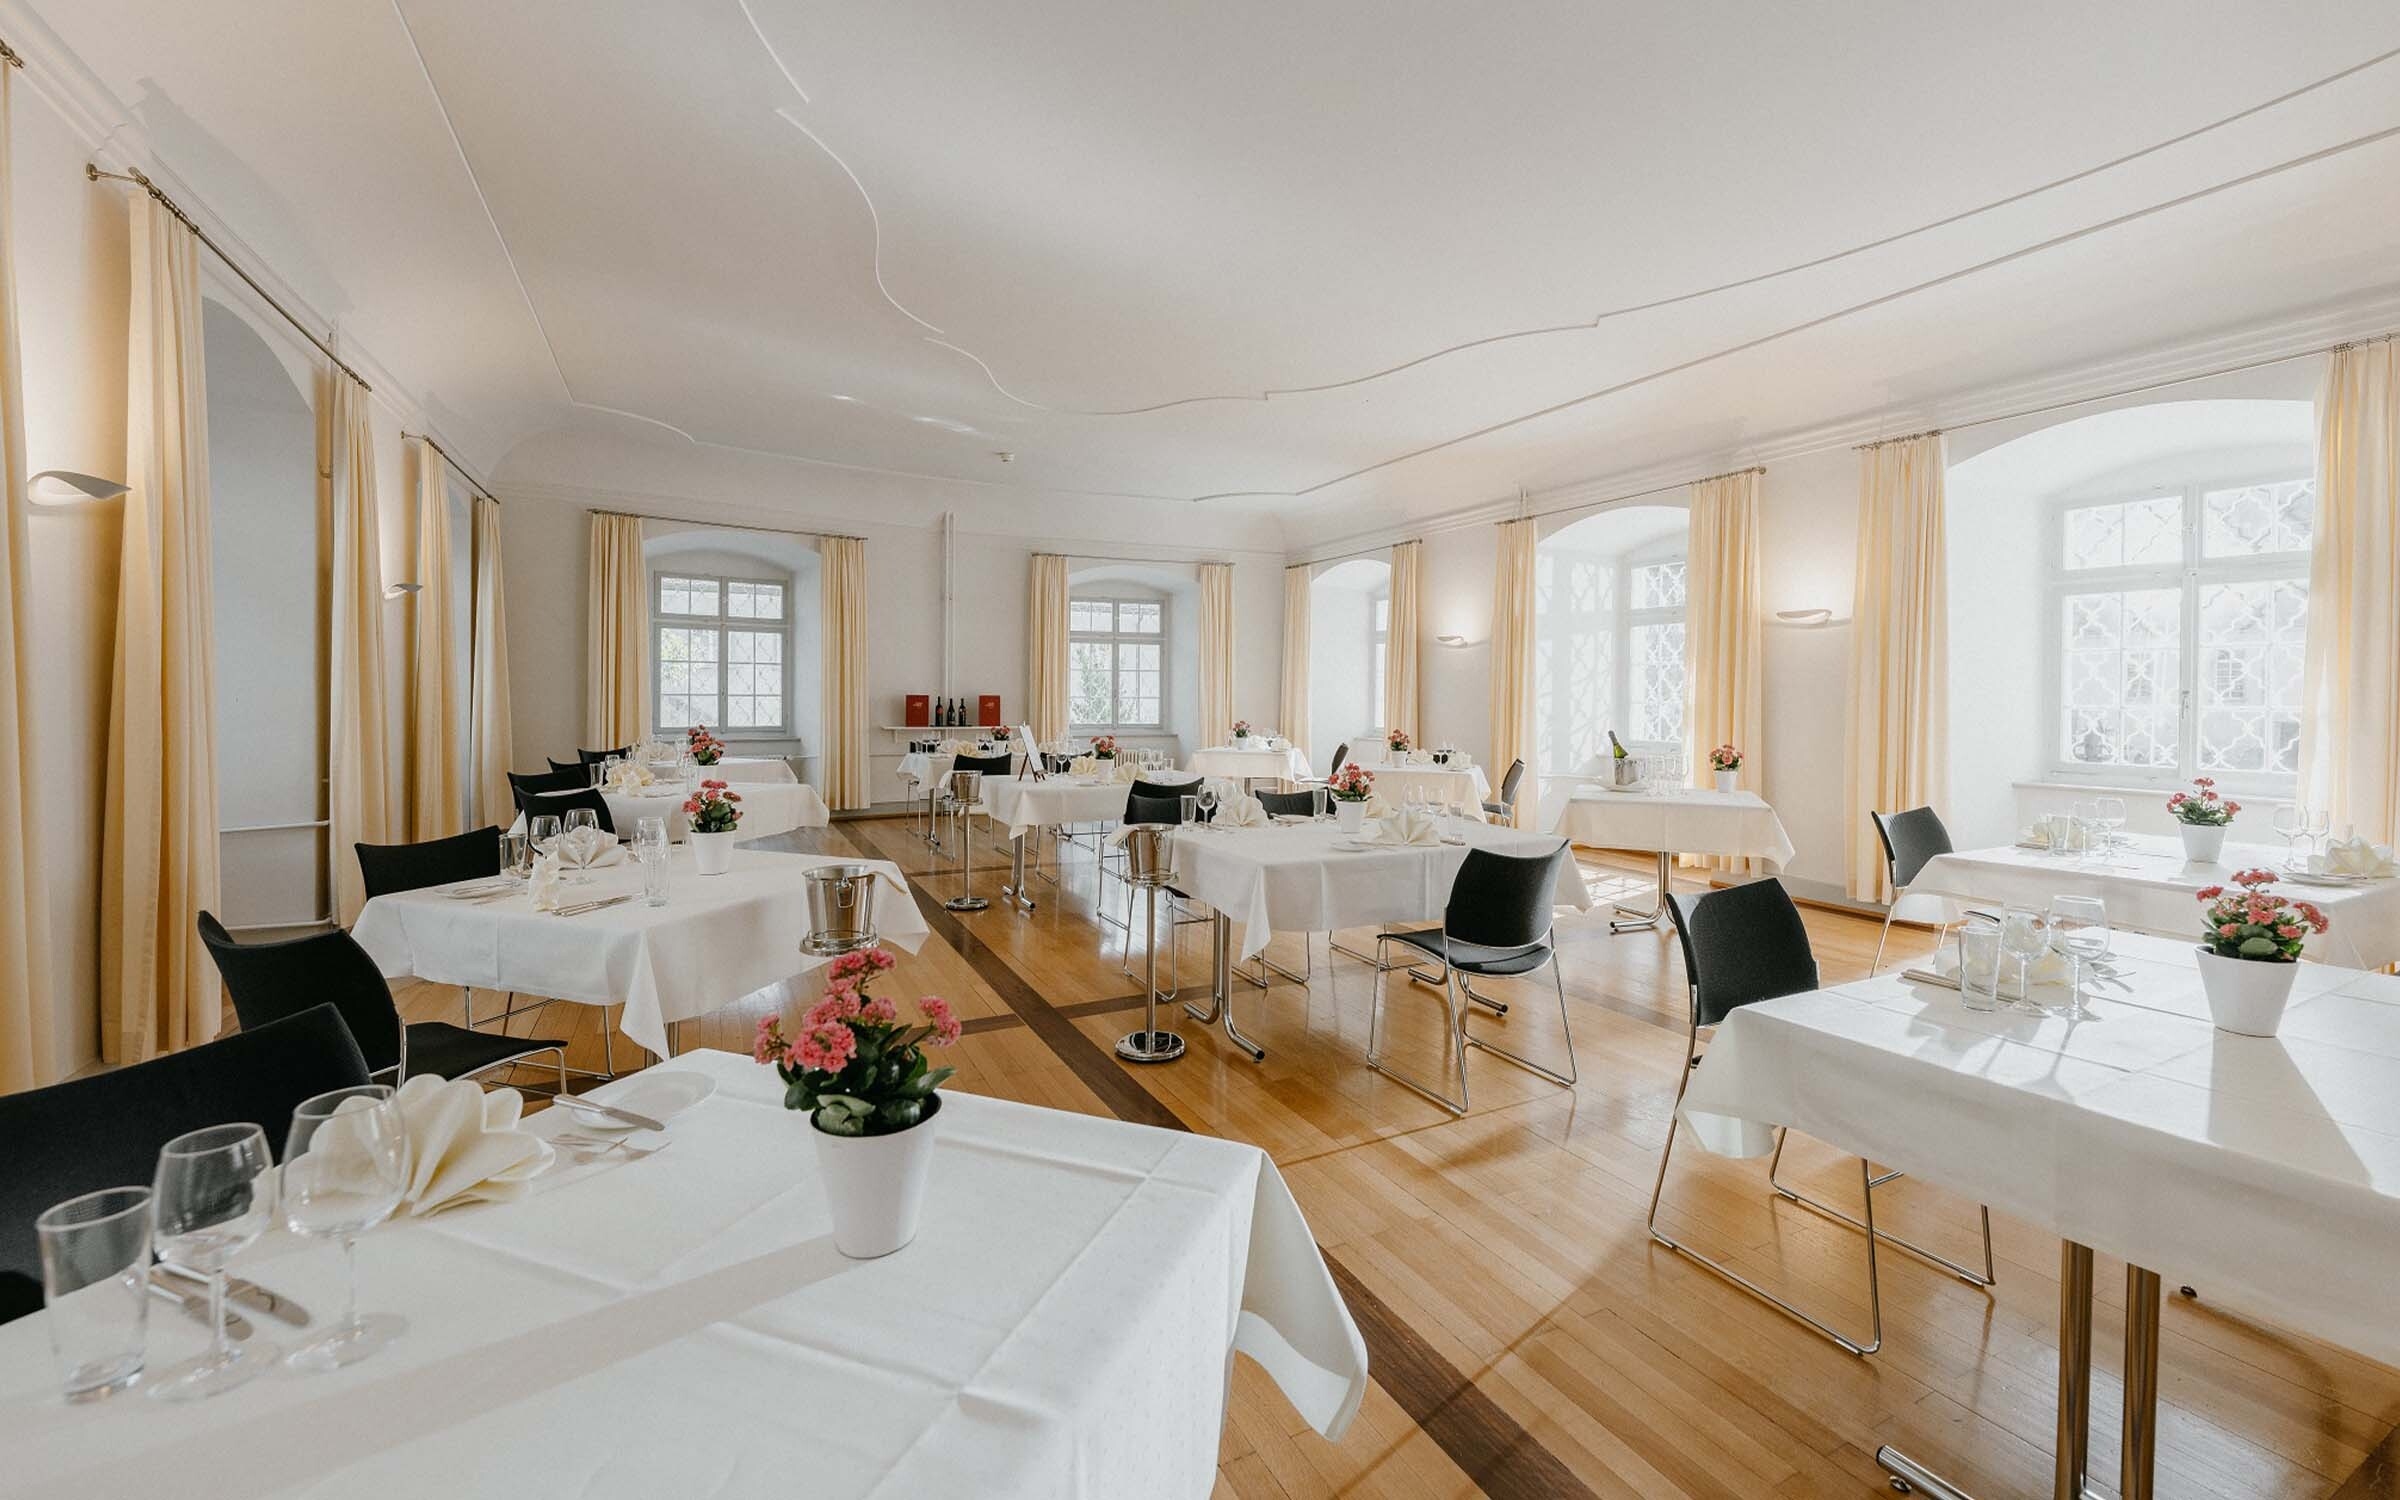 Portrait kloster fischingen swiss historic hotels 02